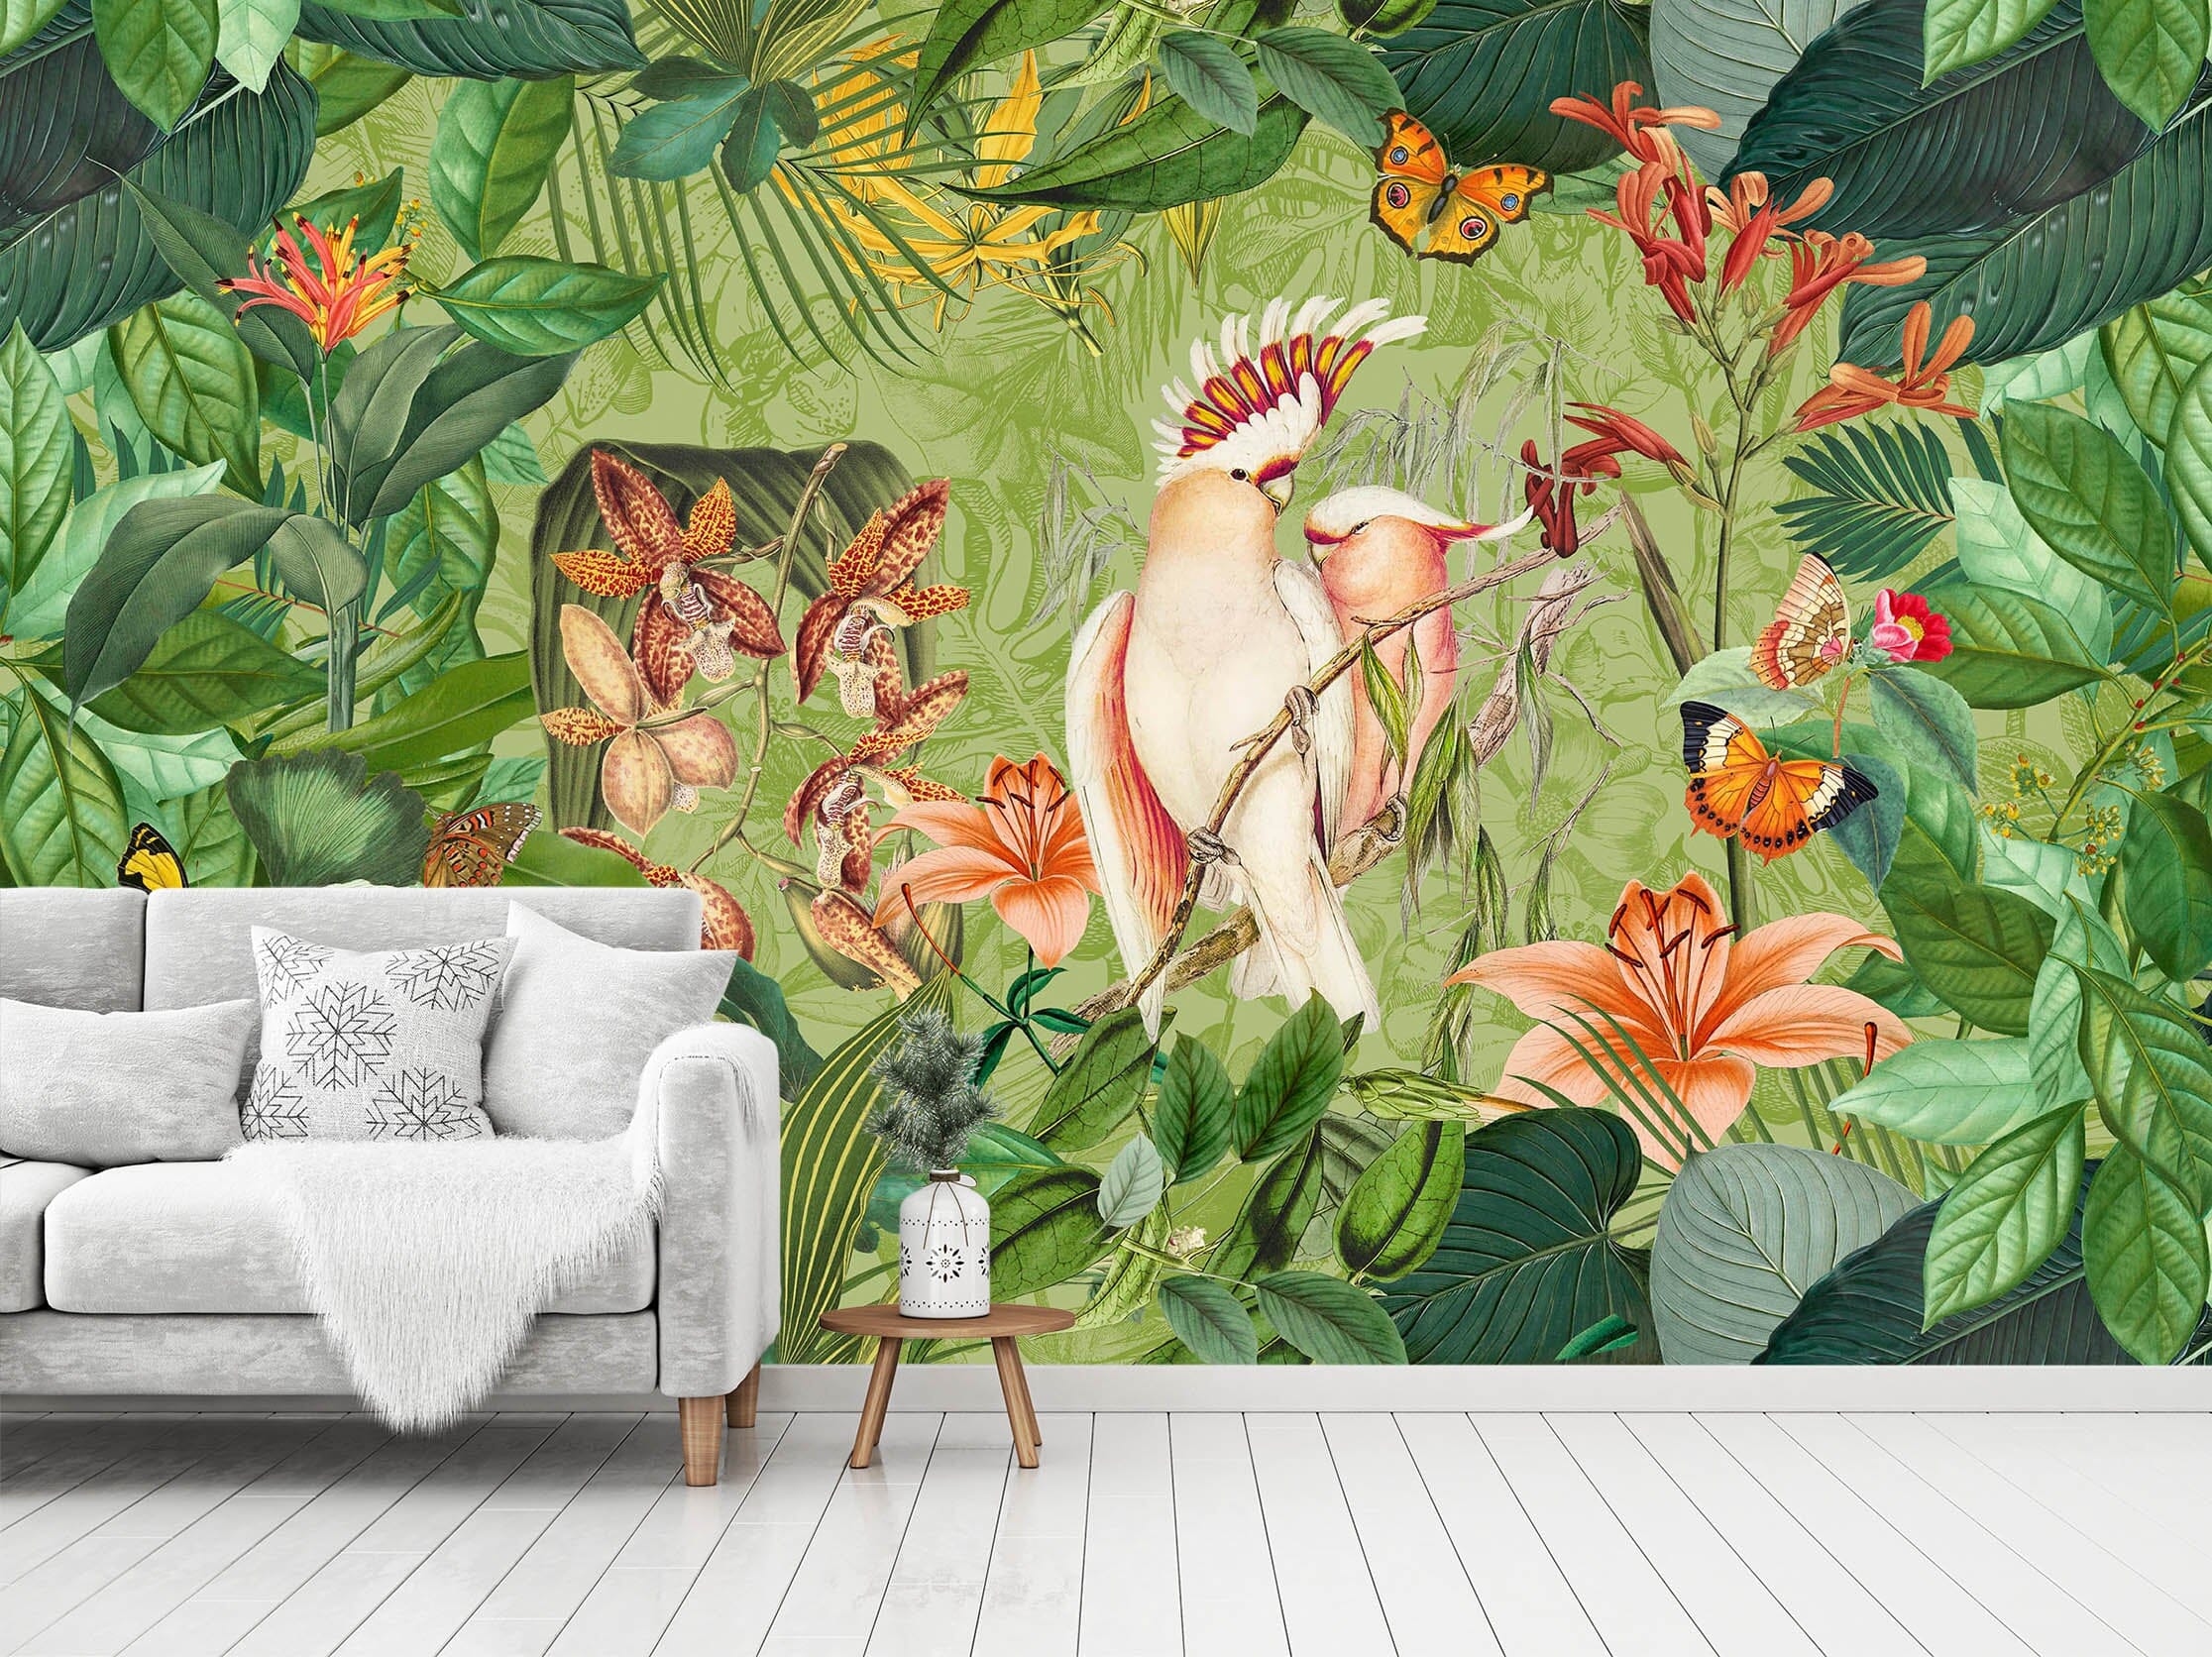 3D Cockatoos And Butterflies 1406 Andrea haase Wall Mural Wall Murals Wallpaper AJ Wallpaper 2 